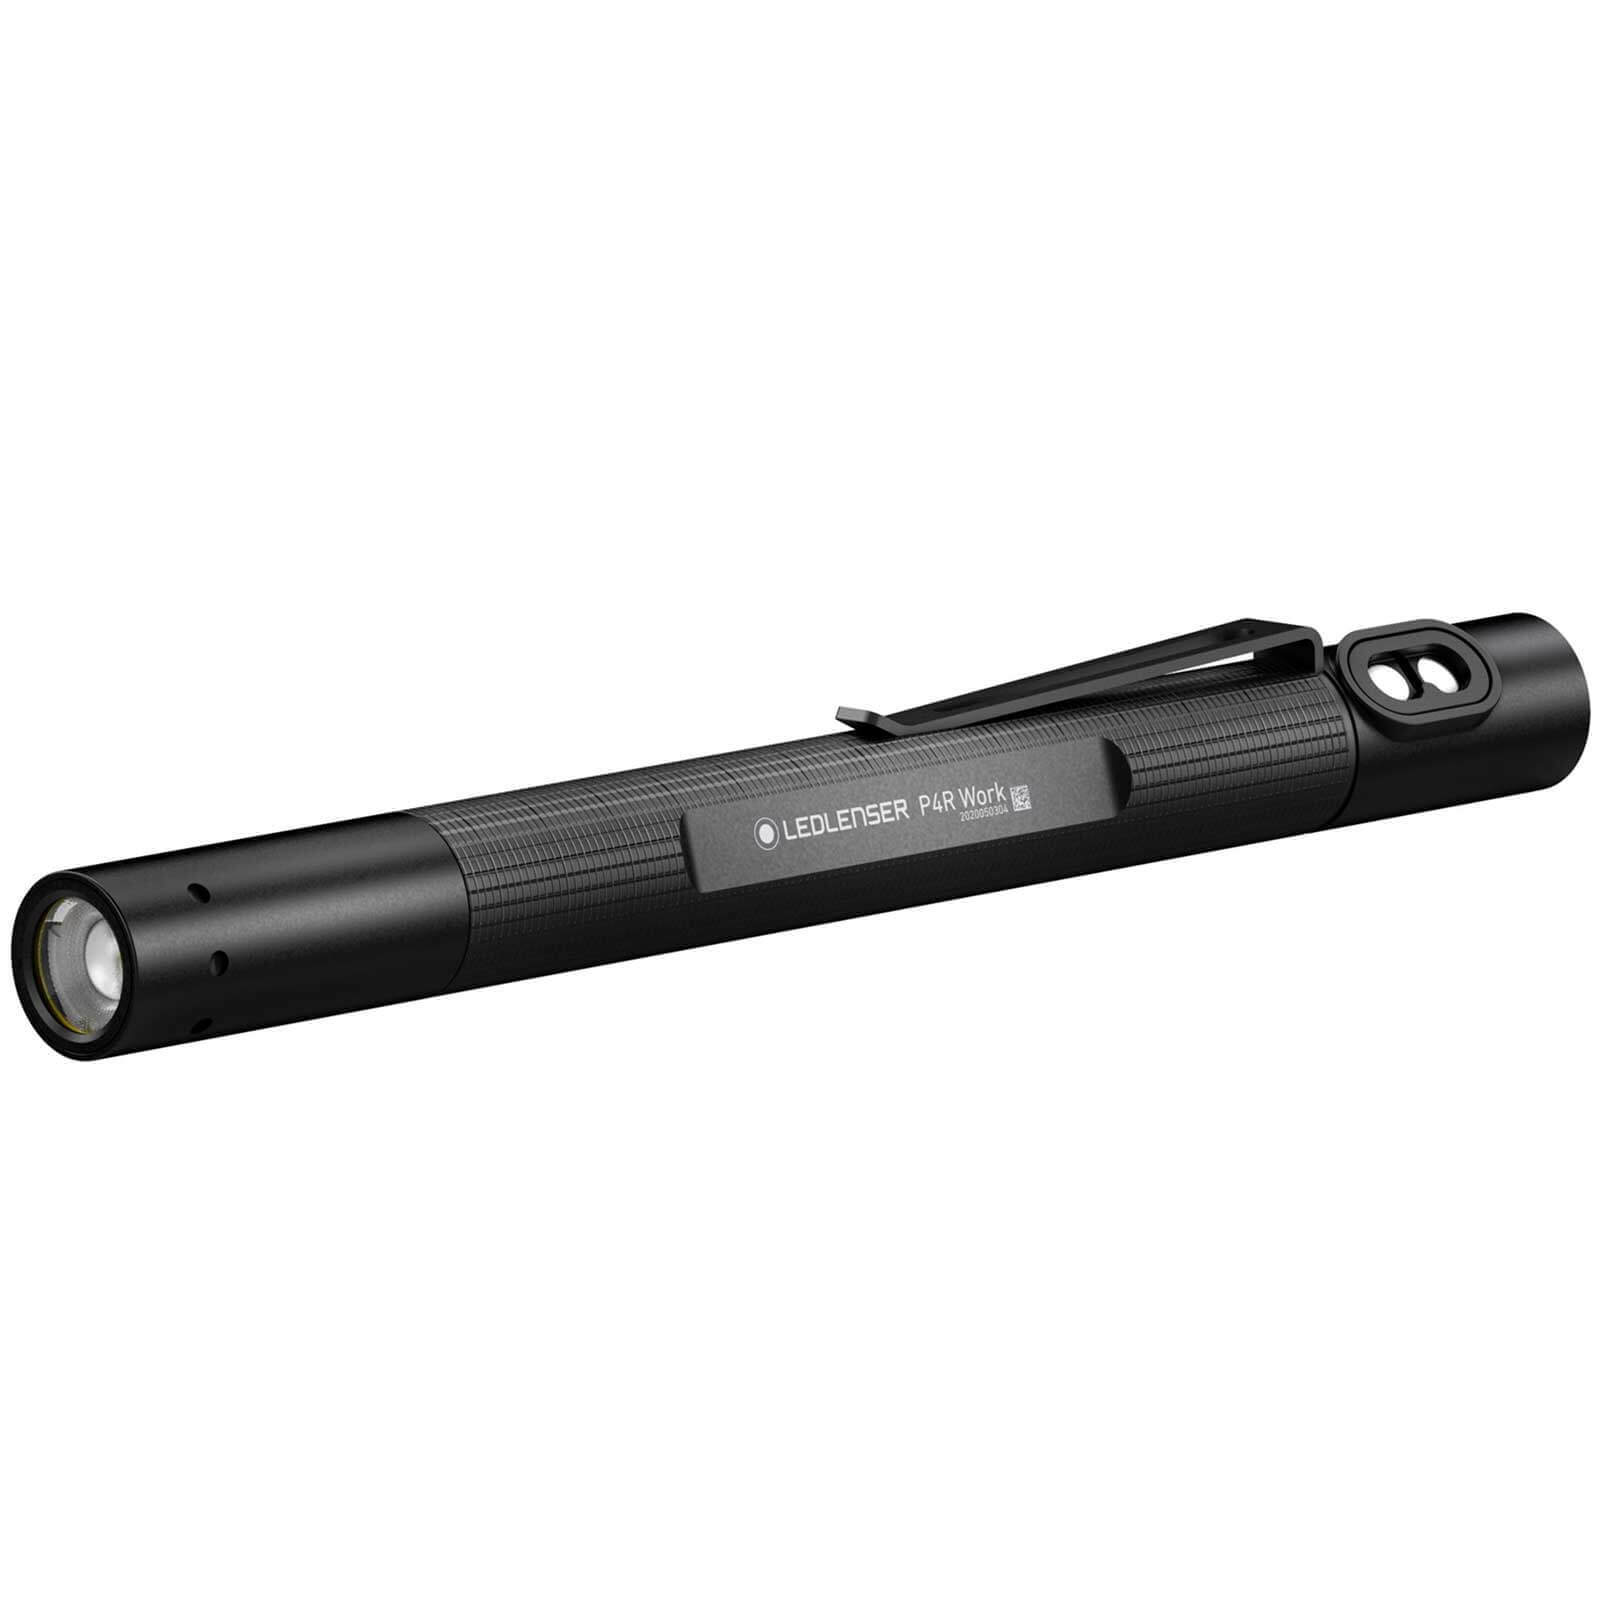 Image of LED Lenser P4R WORK Rechargeable LED Torch Black